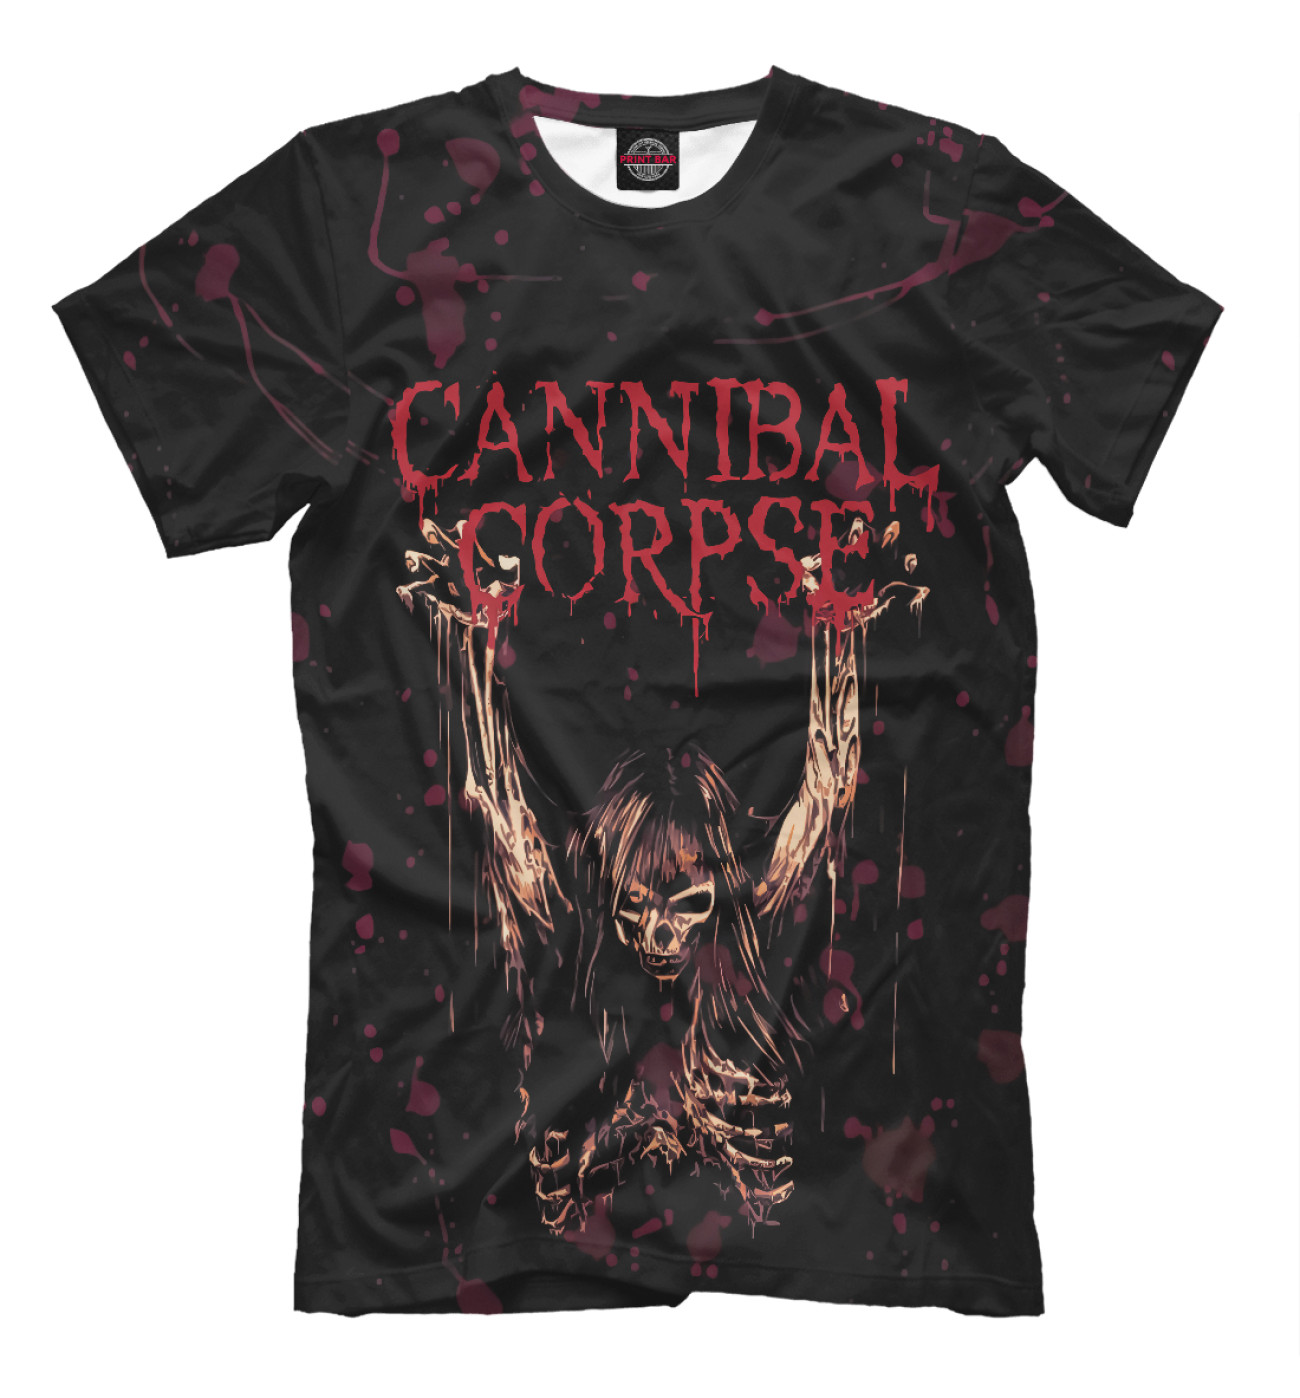 Мужская Футболка Cannibal Corpse, артикул: CCR-275814-fut-2